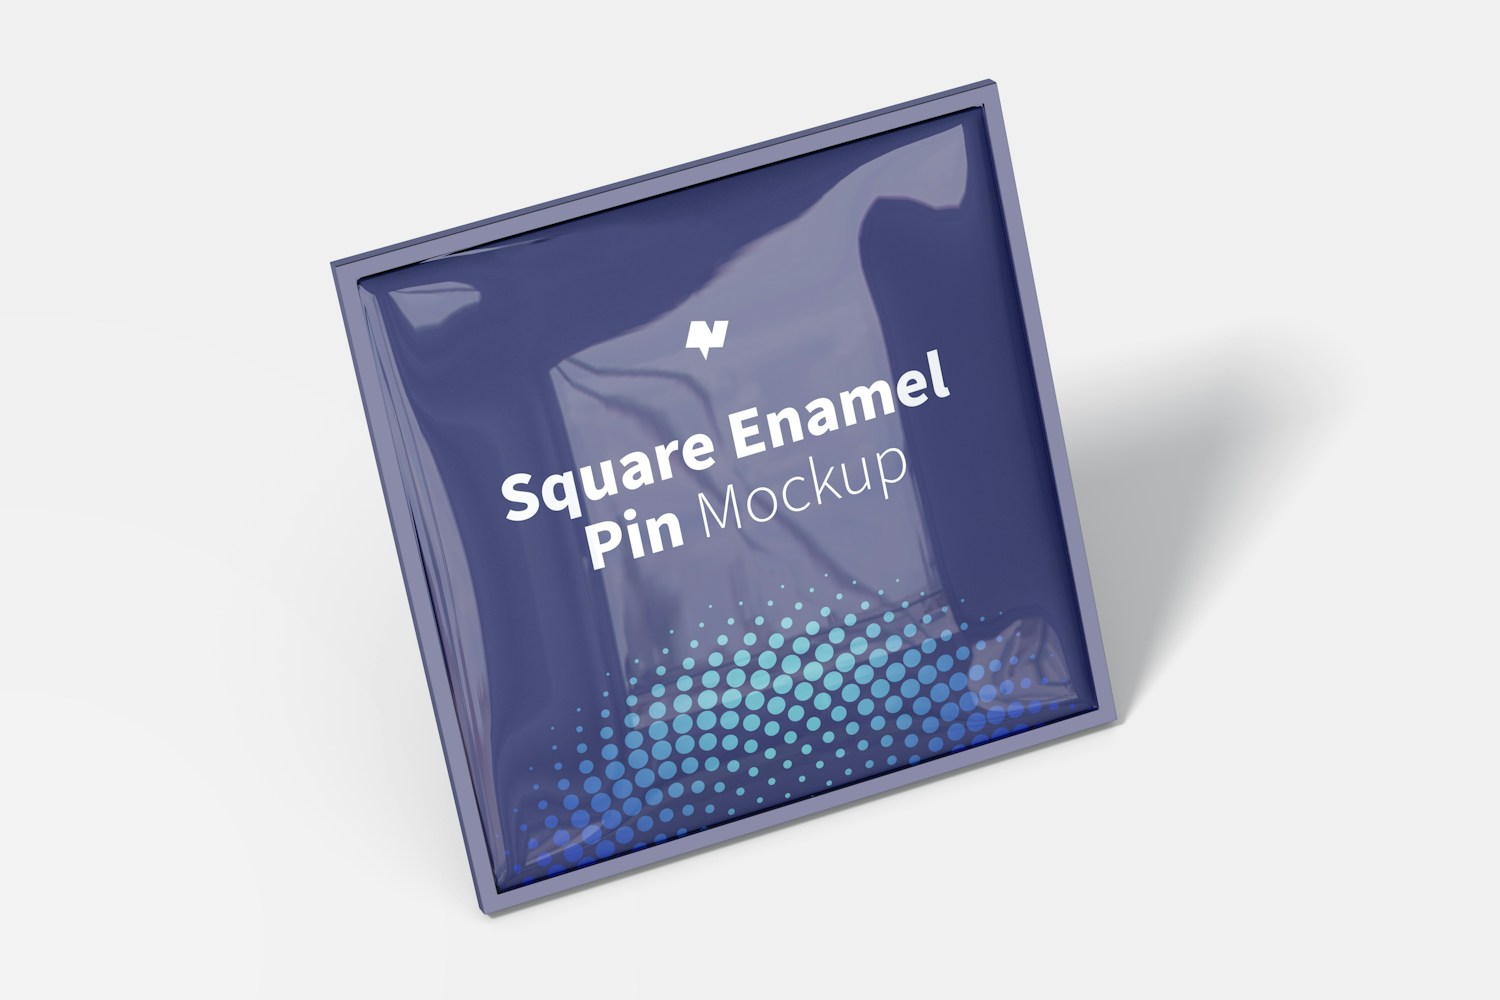 Square Enamel Pin Mockup